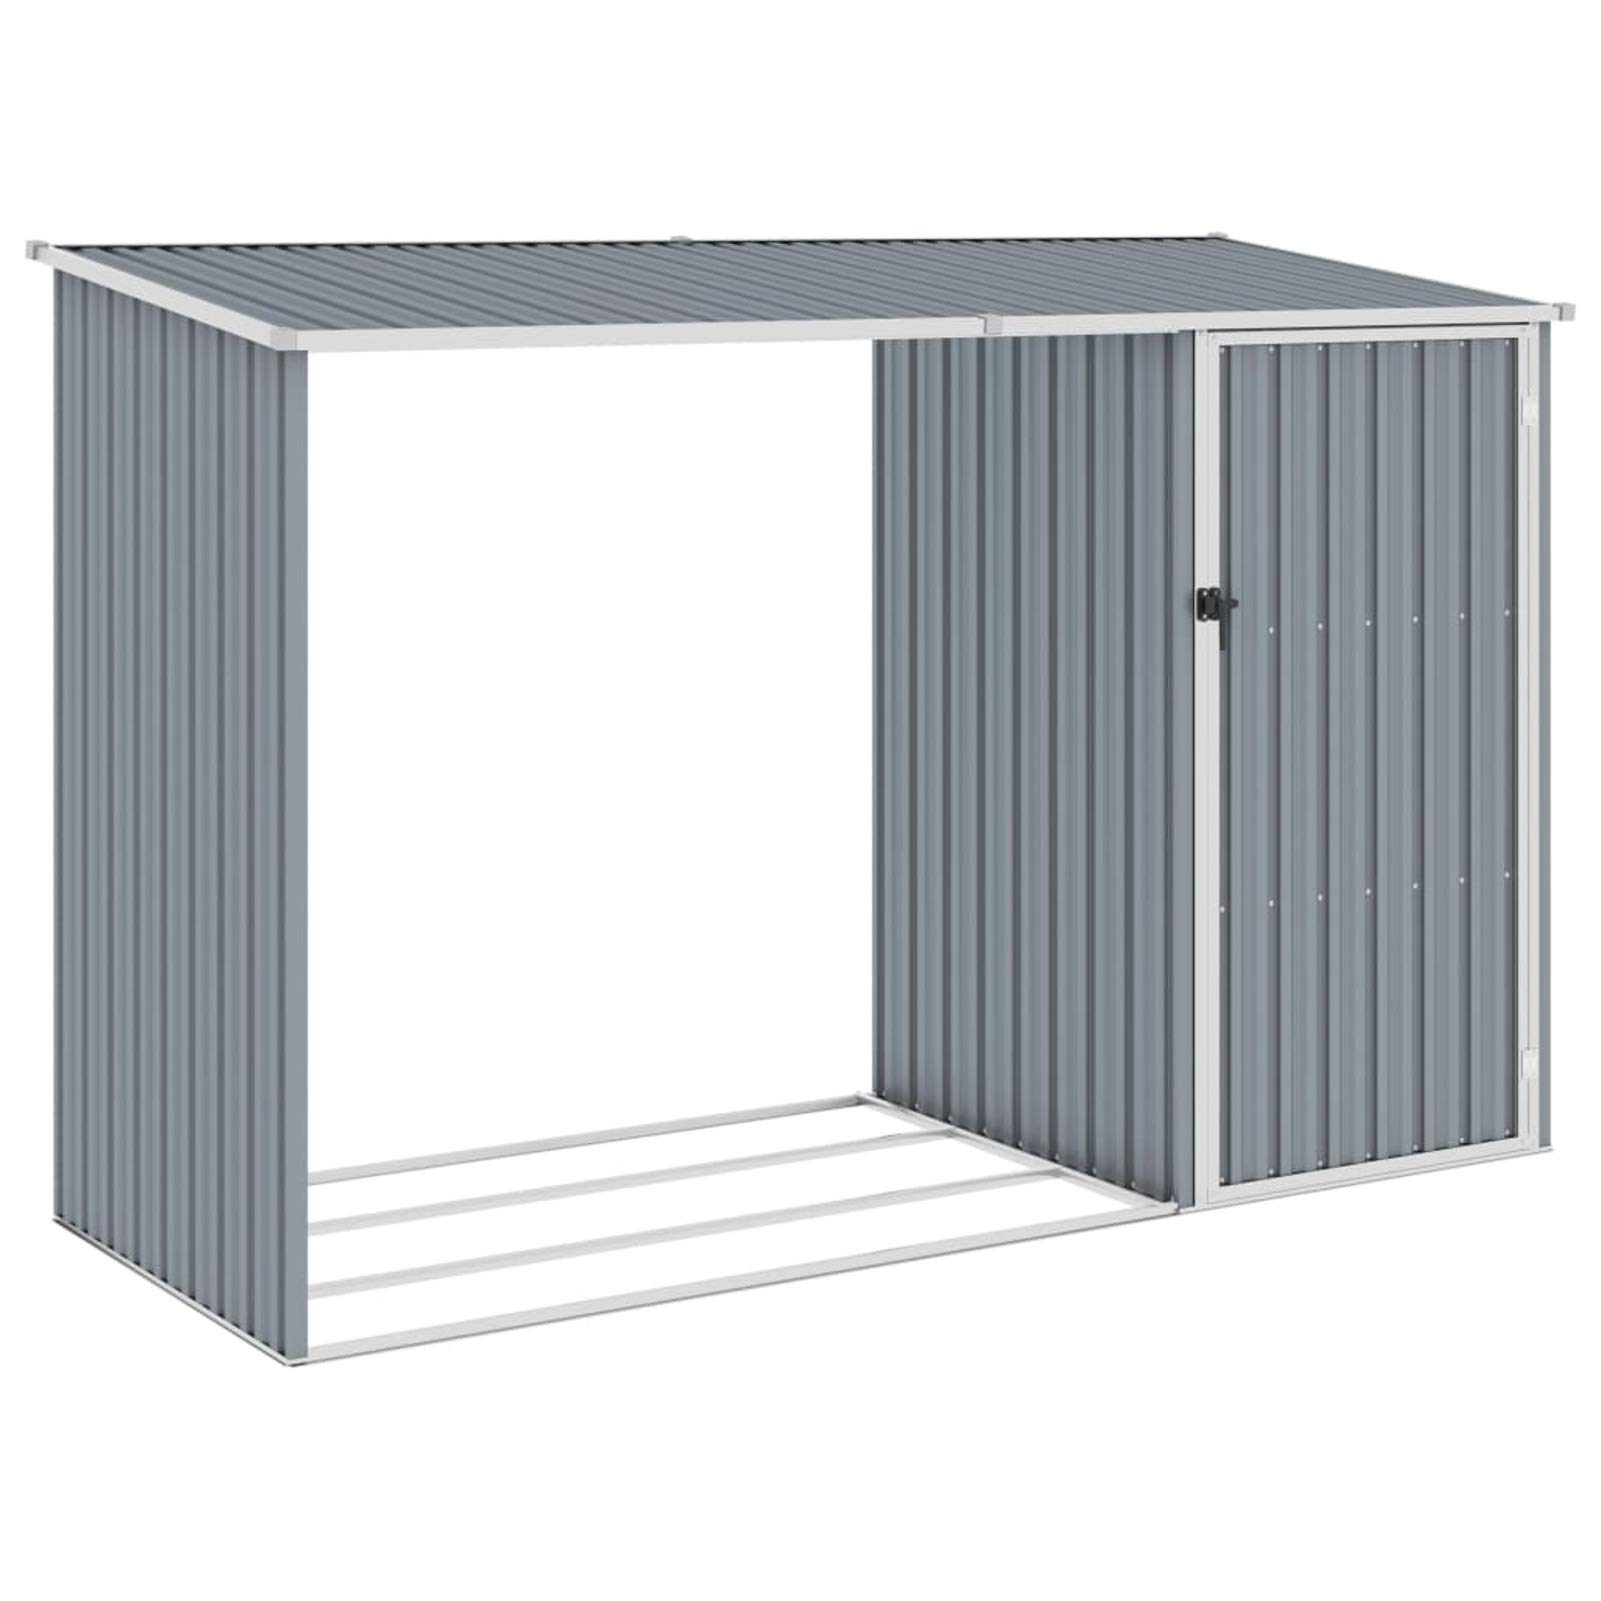 pedkit cobertizo de jardin de lena casetilla para lena caseta de almacenamiento para almacenar lena gris acero galvanizado